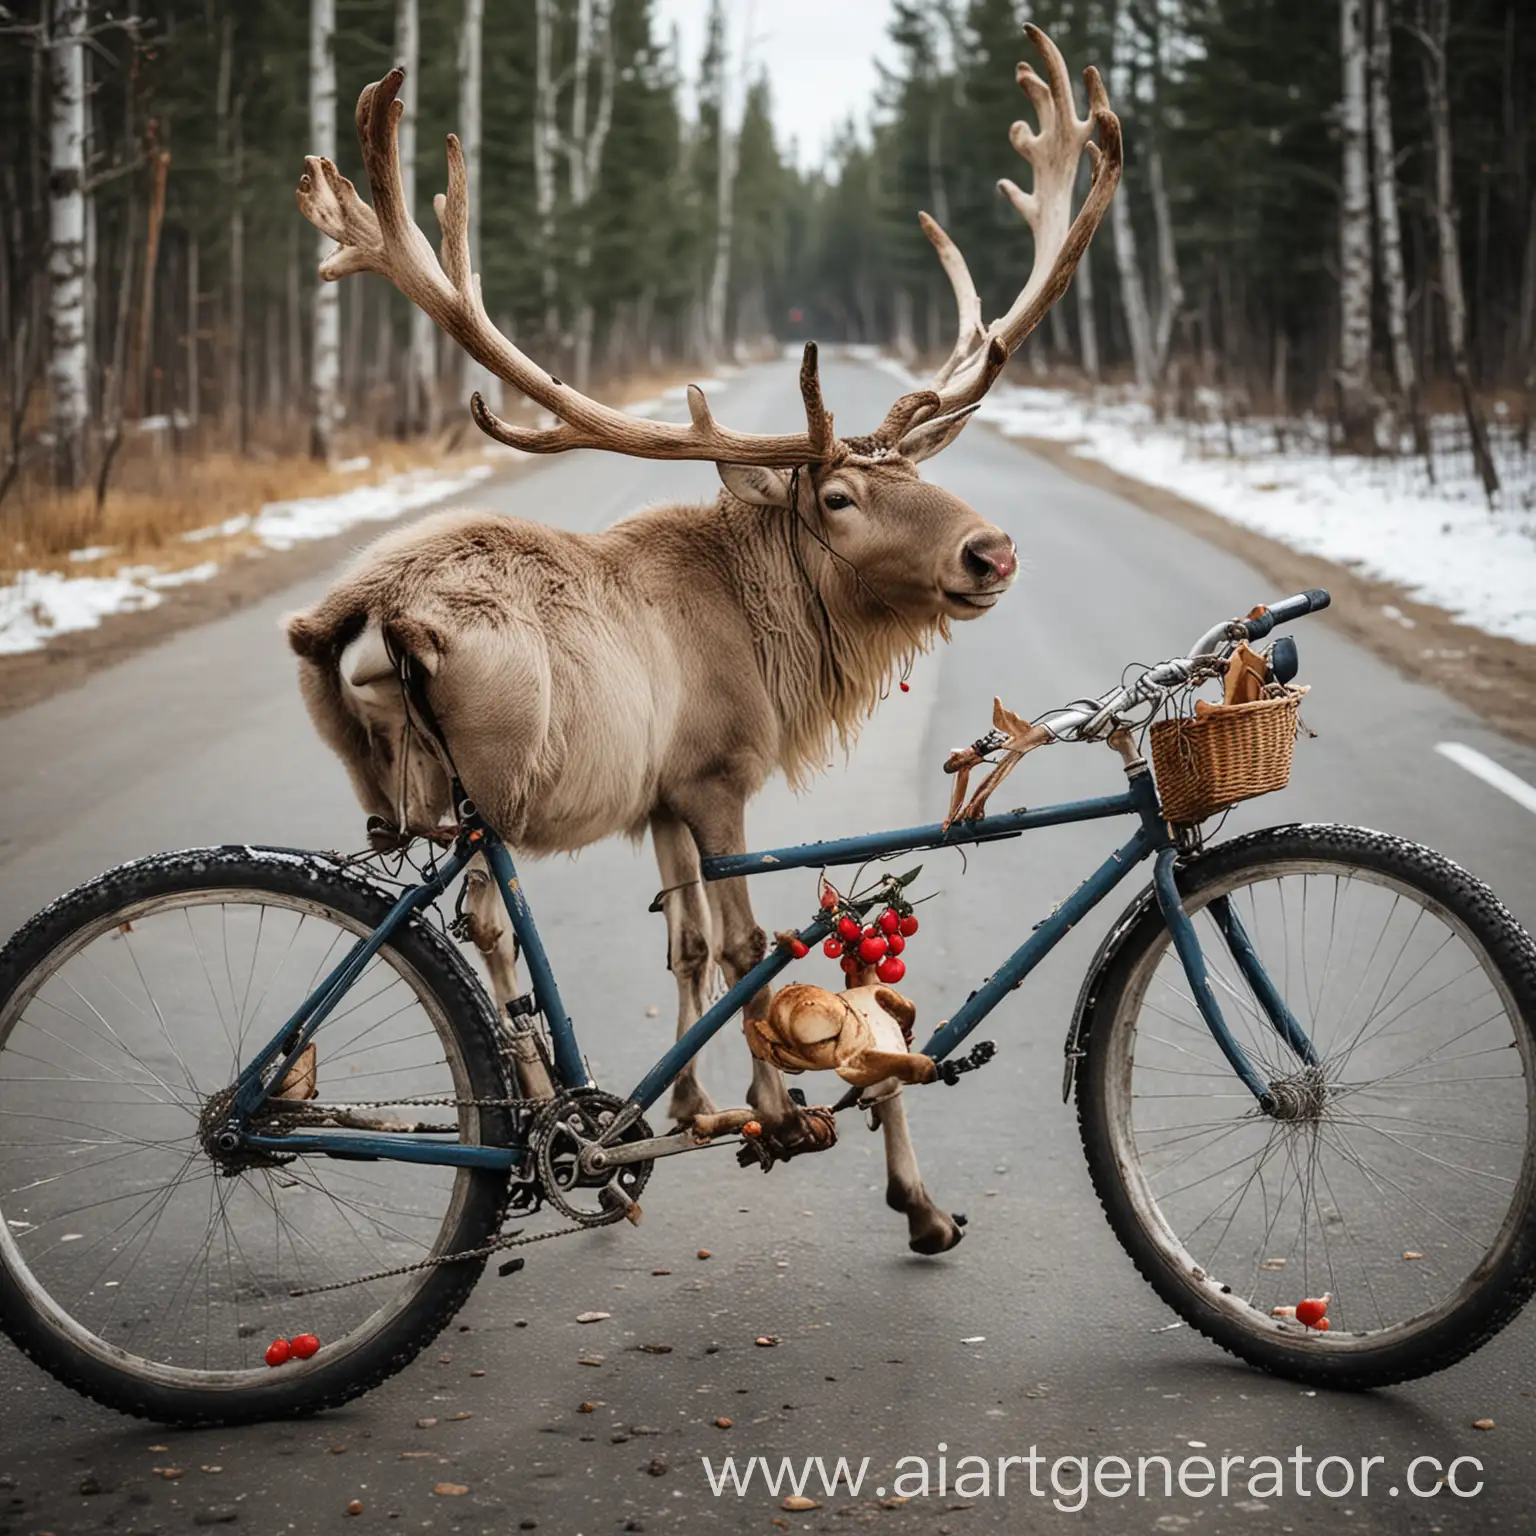 Plump-Yakut-Riding-Bicycle-with-Reindeer-Companion